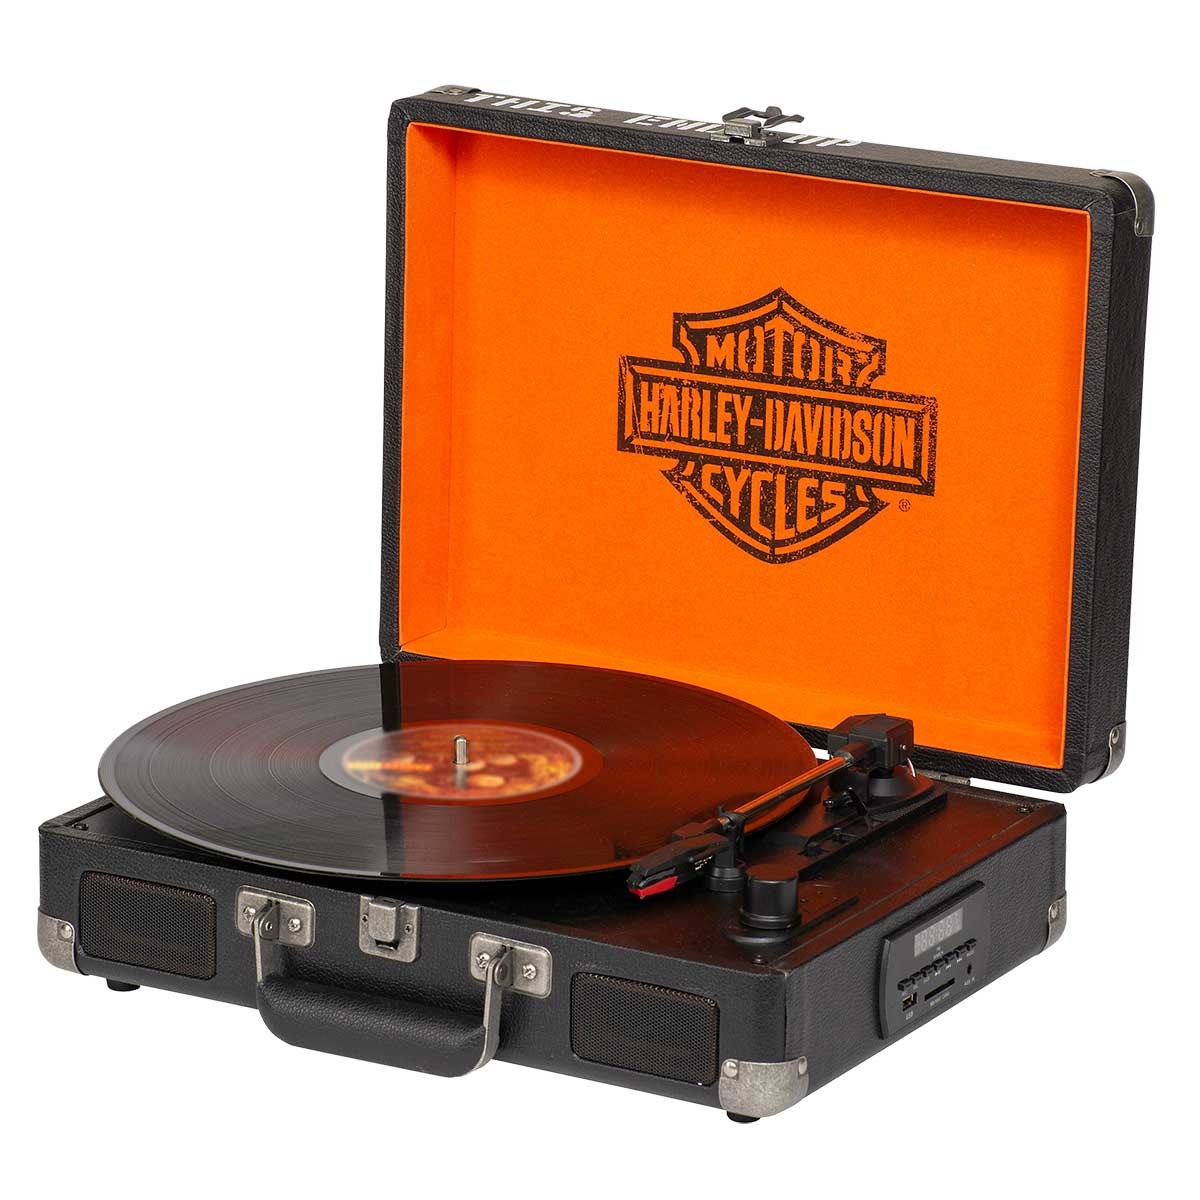 Harley-Davidson B&amp; S Portable Record Player